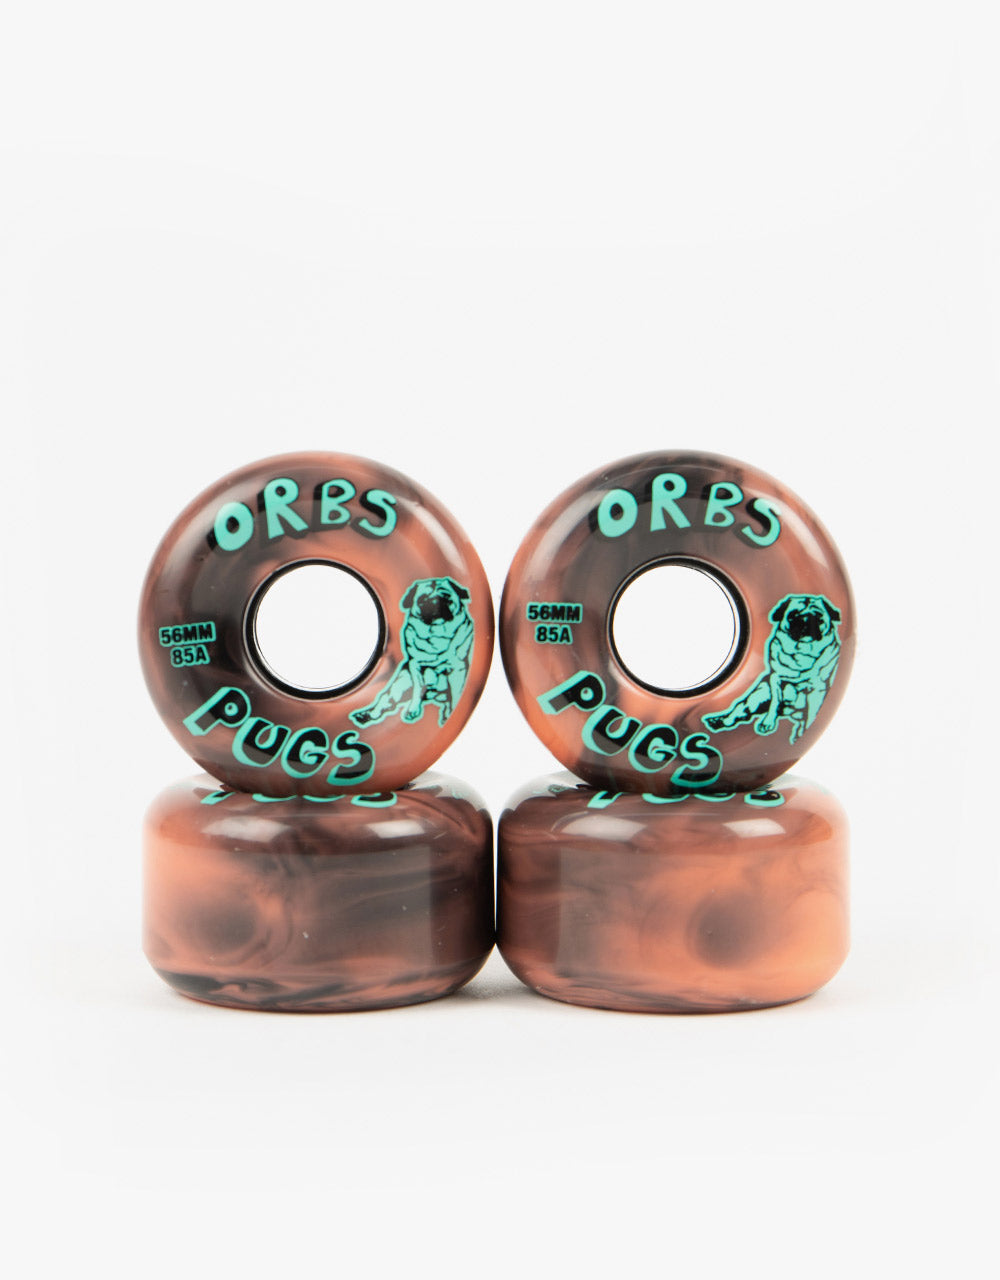 Orbs Pugs Conical 85a Skateboard Wheel - 56mm